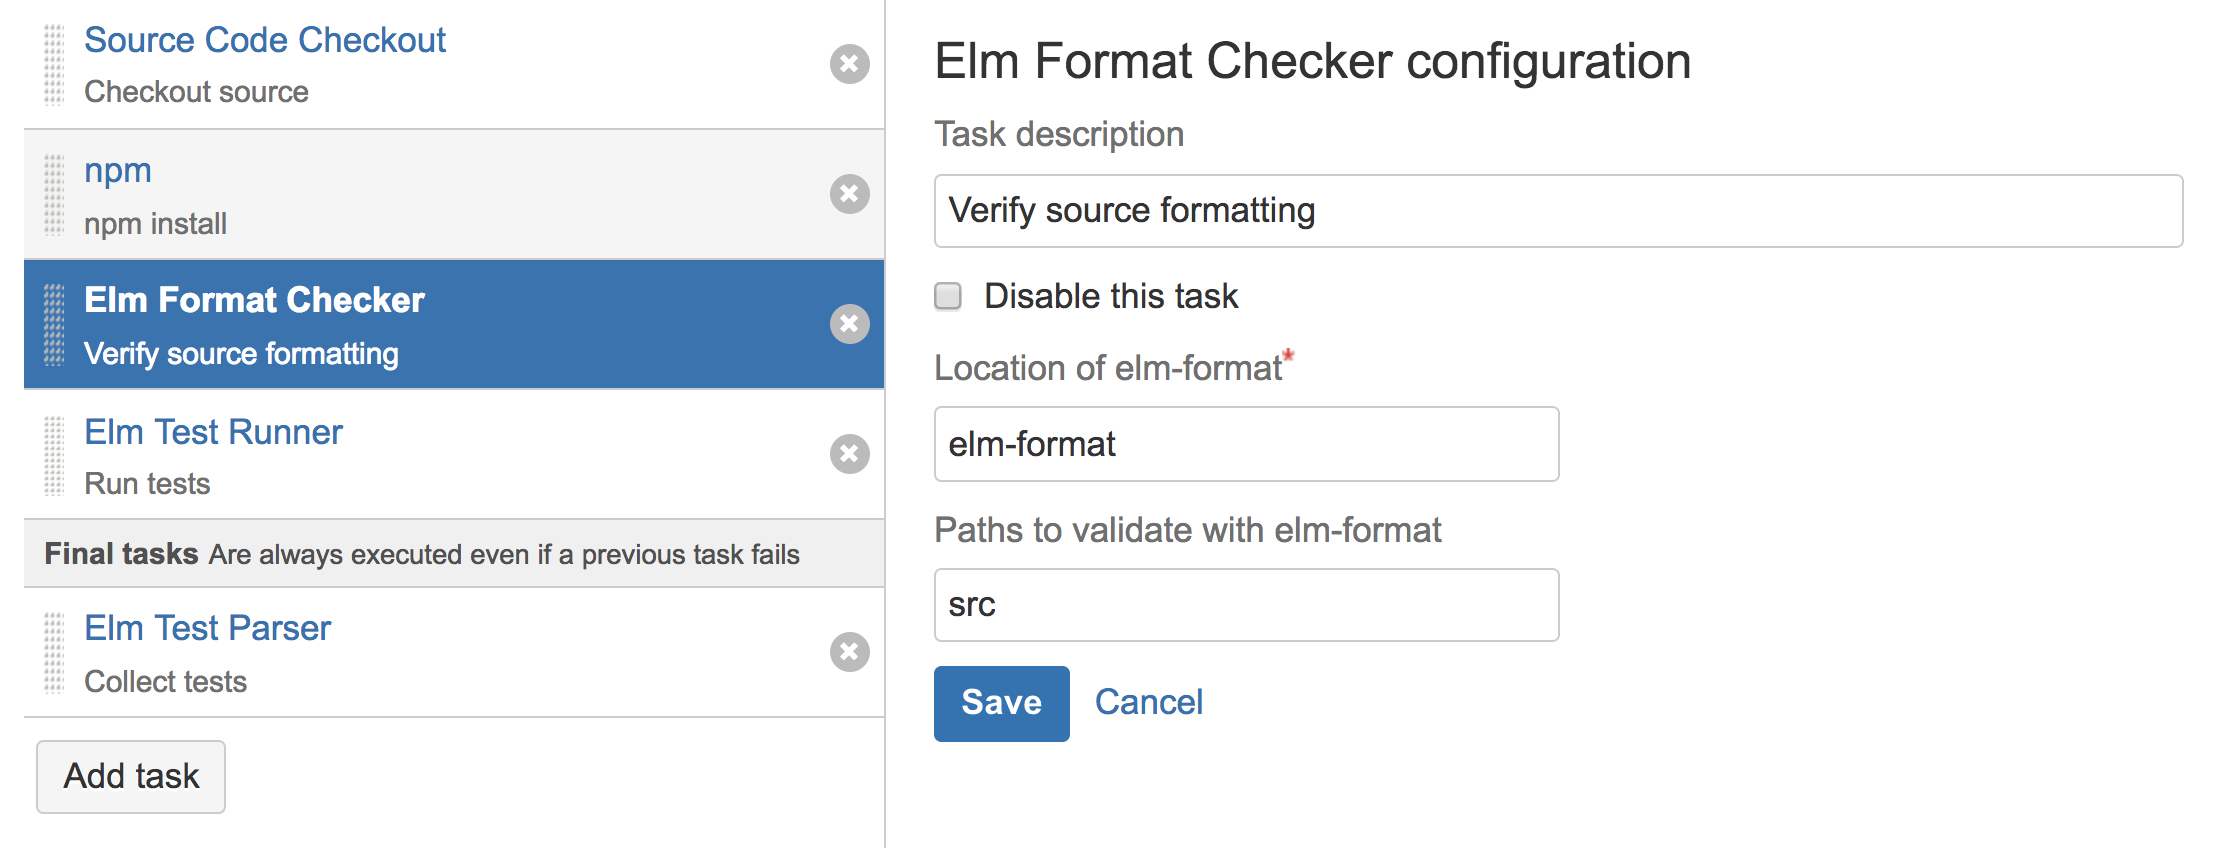 Sample Elm Format Task